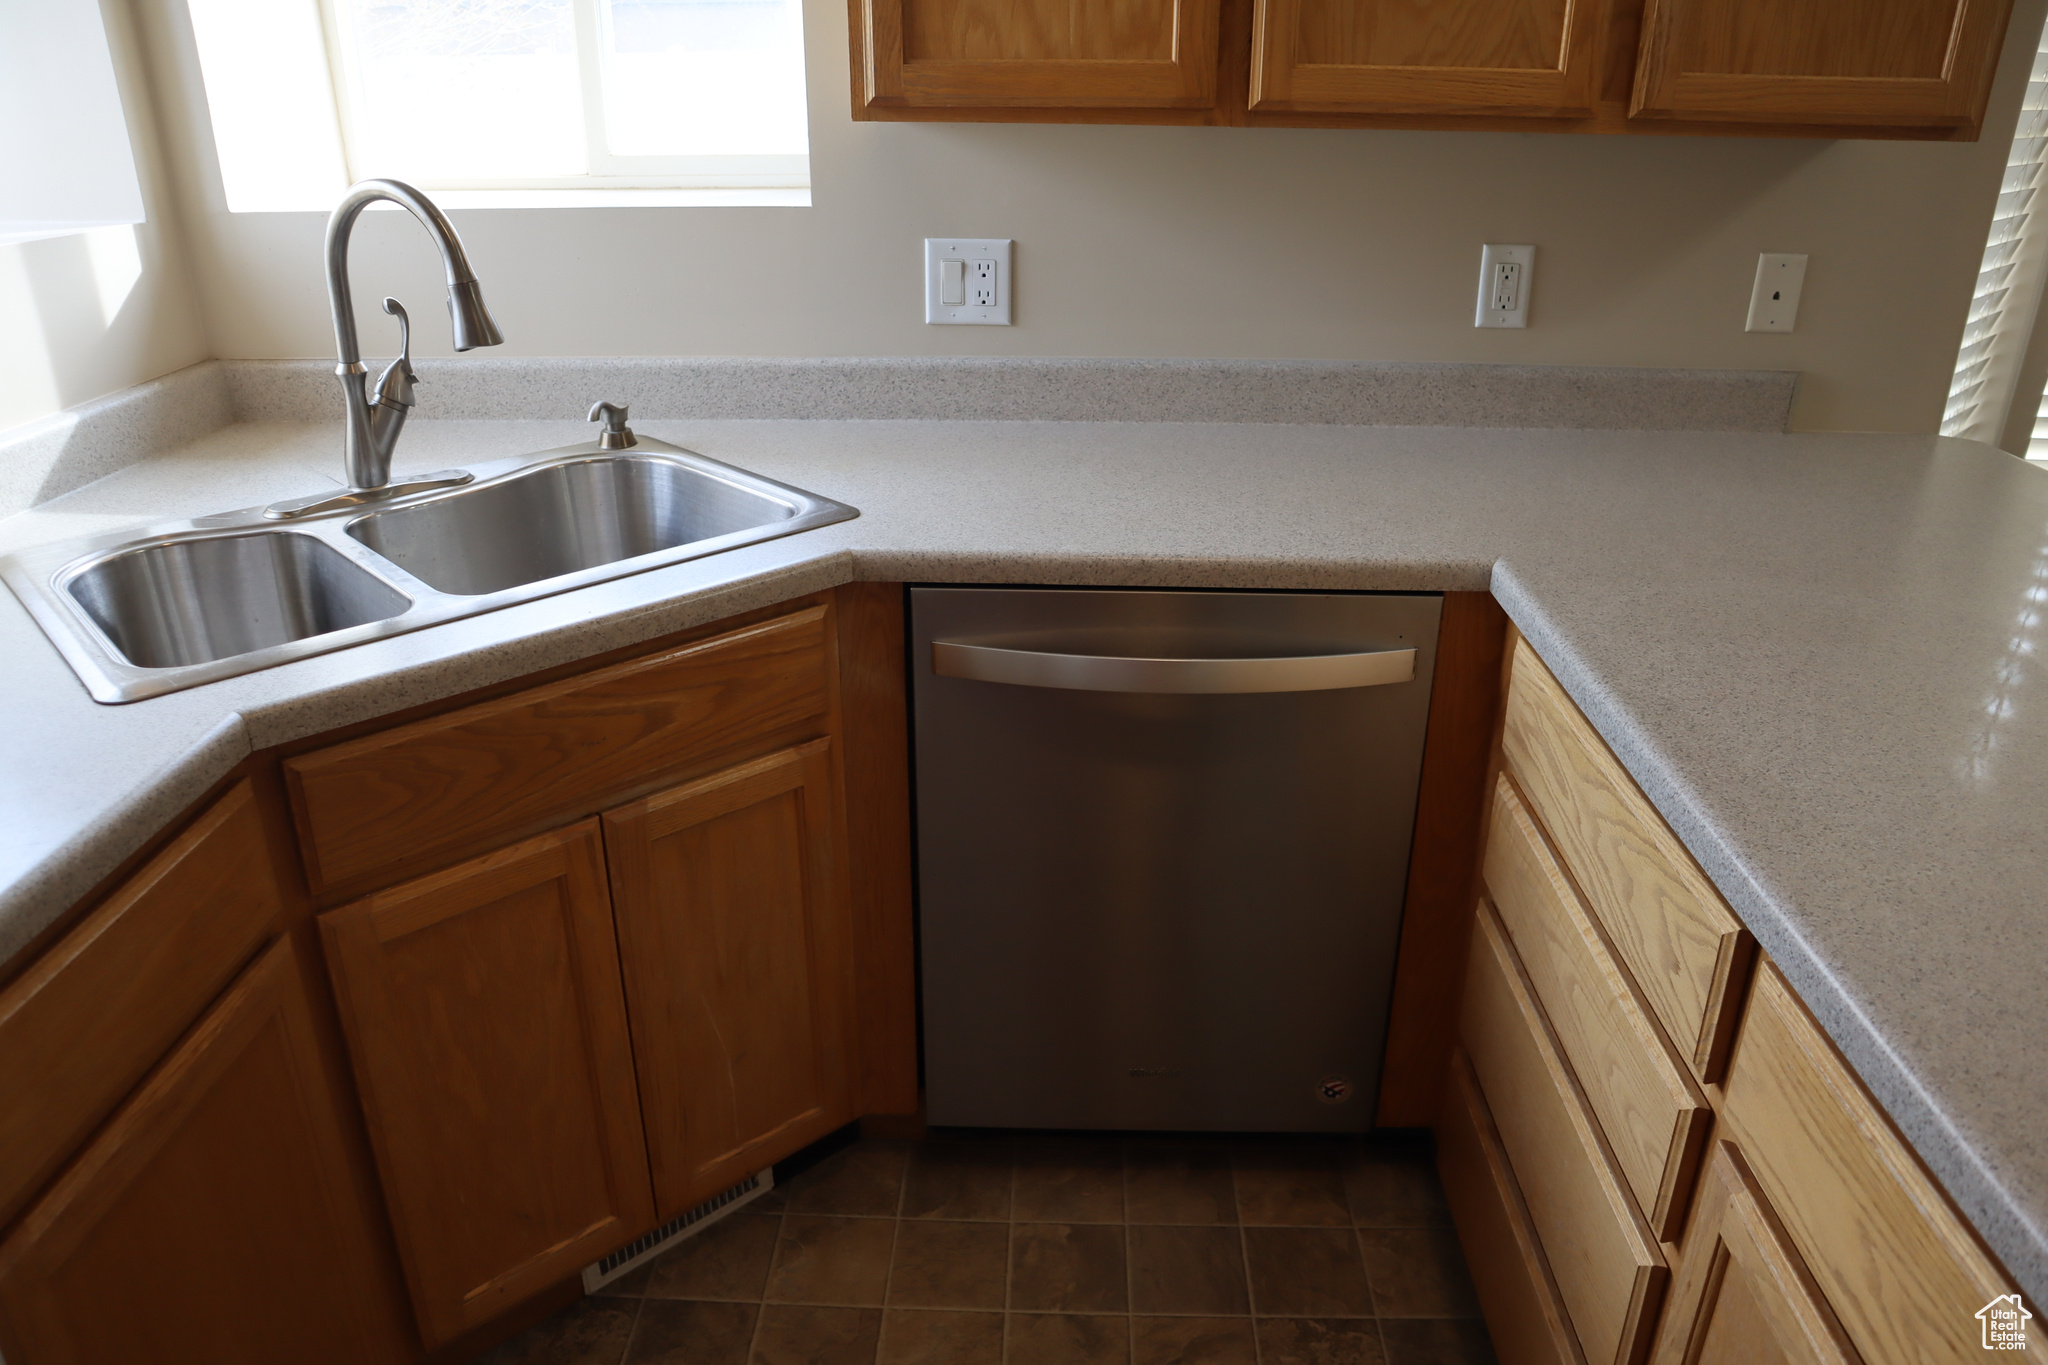 Kitchen with dark tile floors, dishwasher, and sink